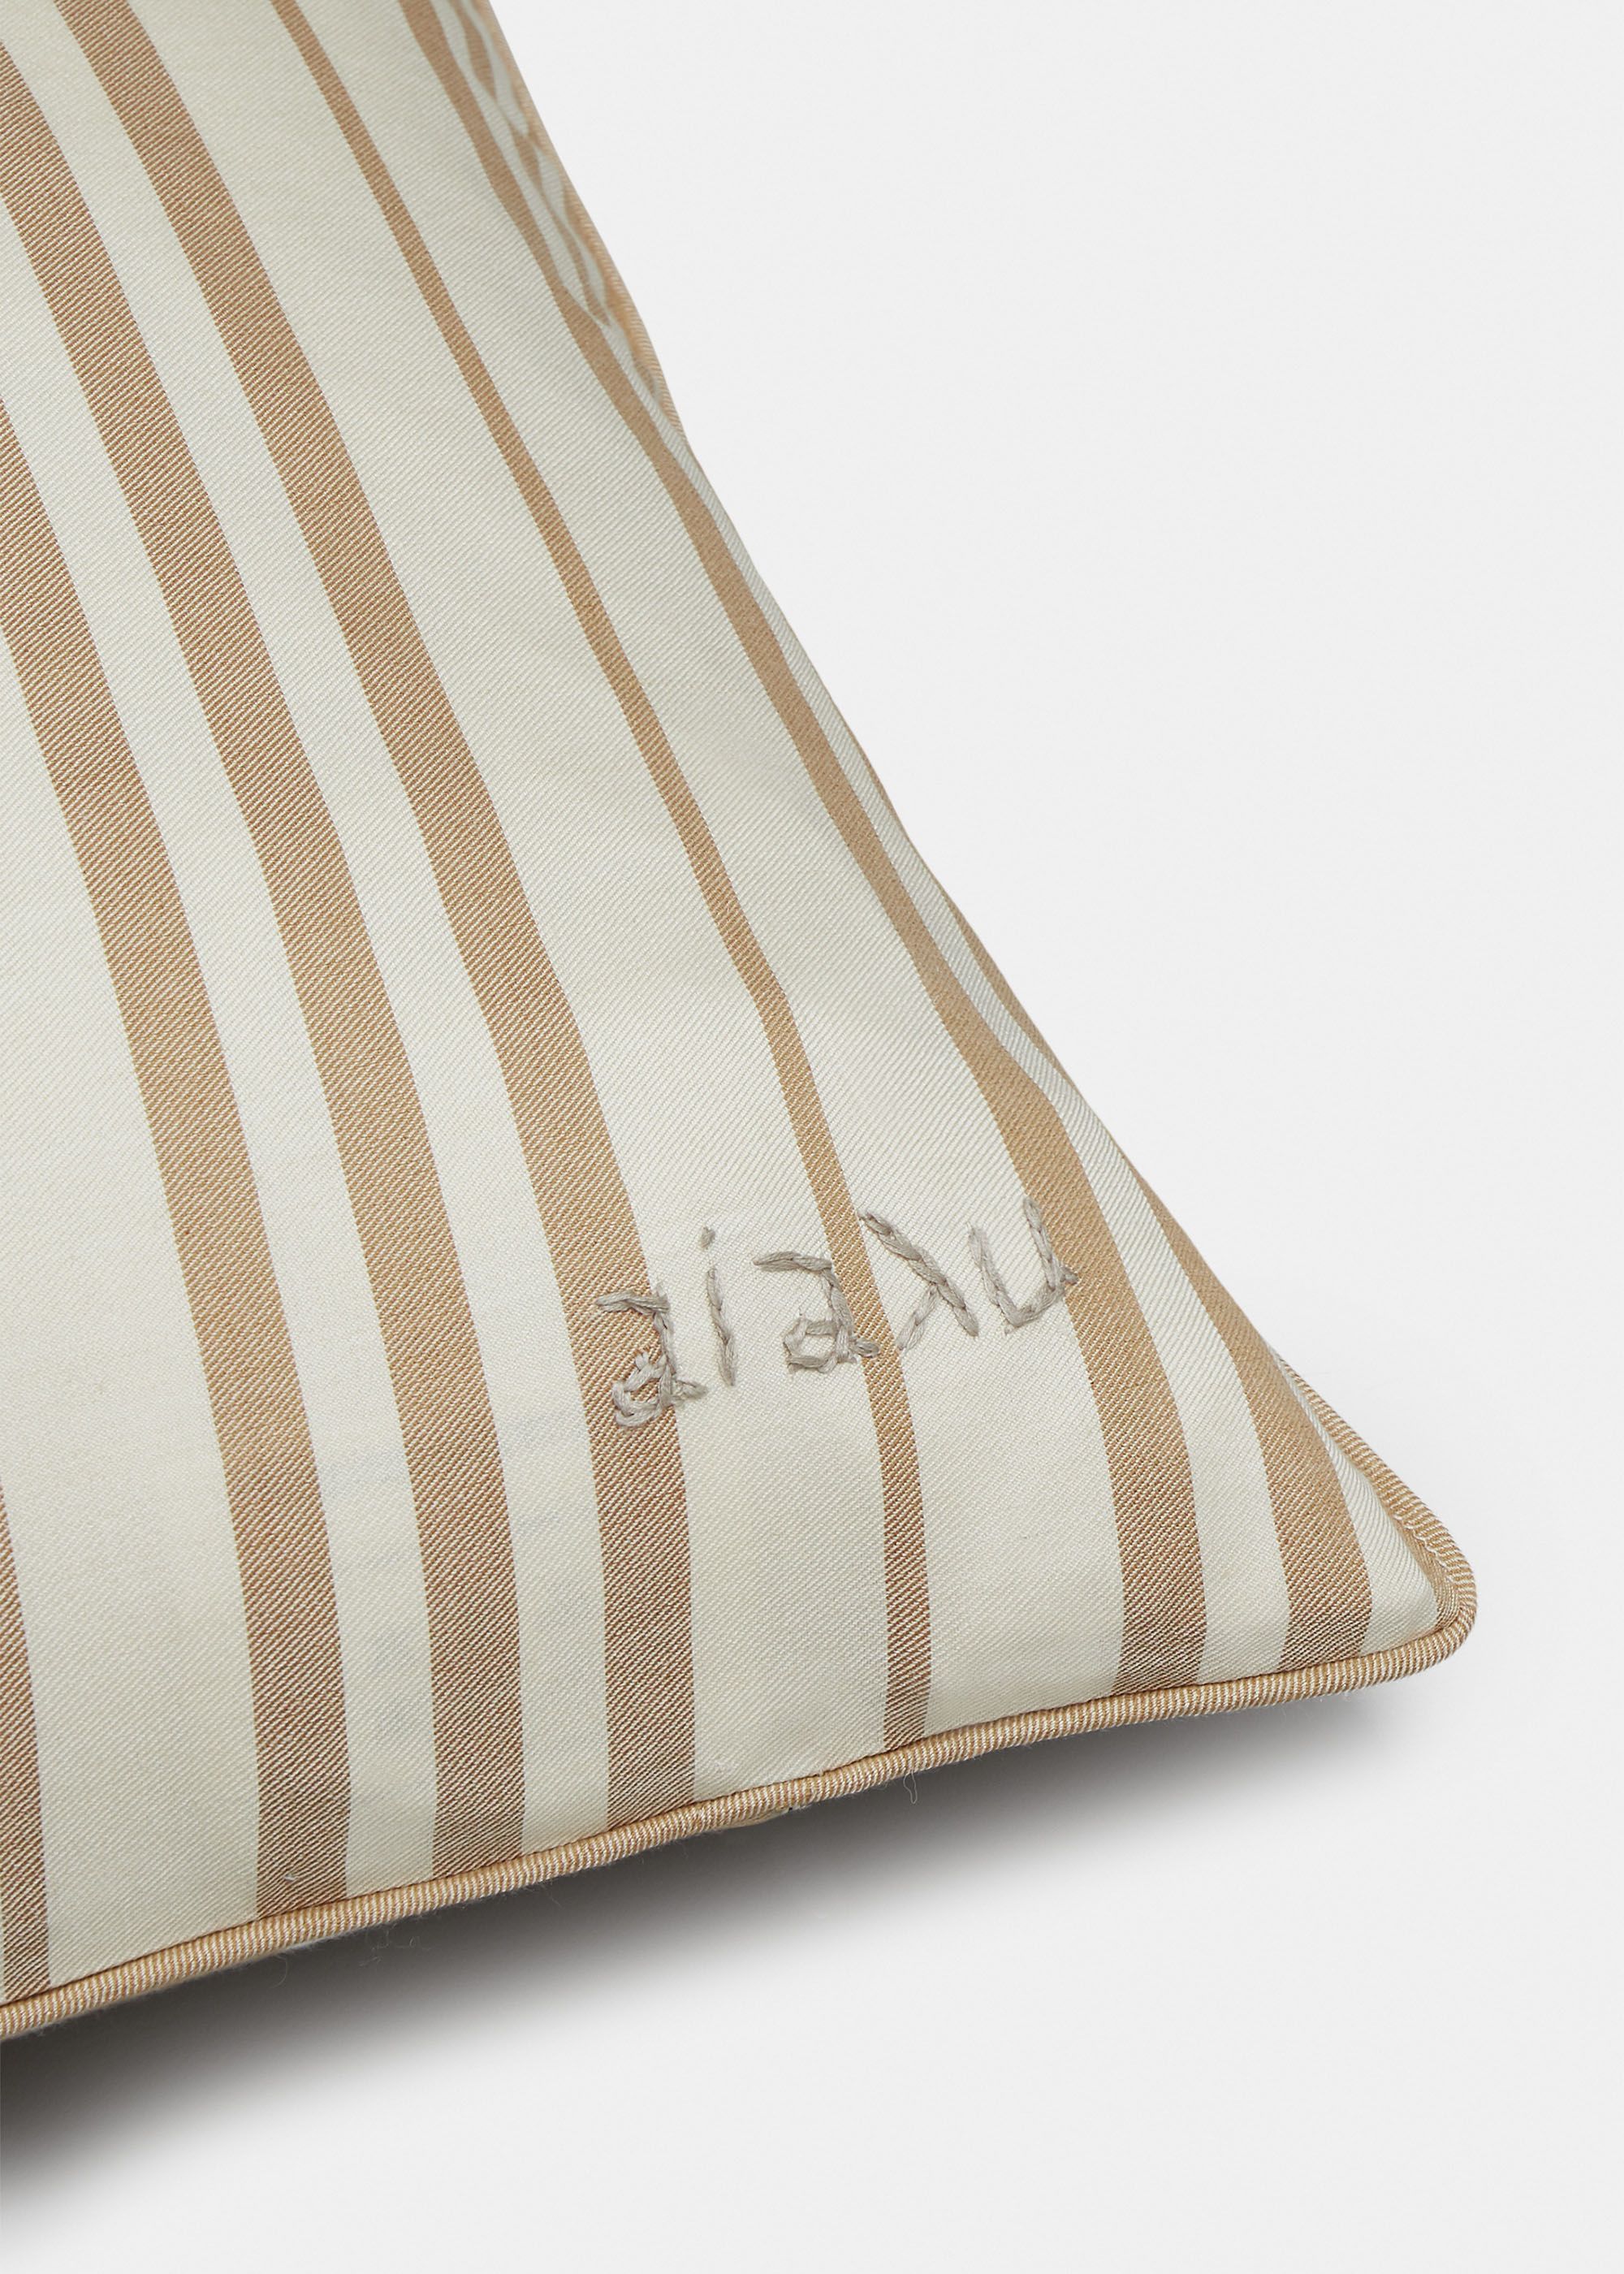 Cushions - Marking Silk Pillow (40x60)